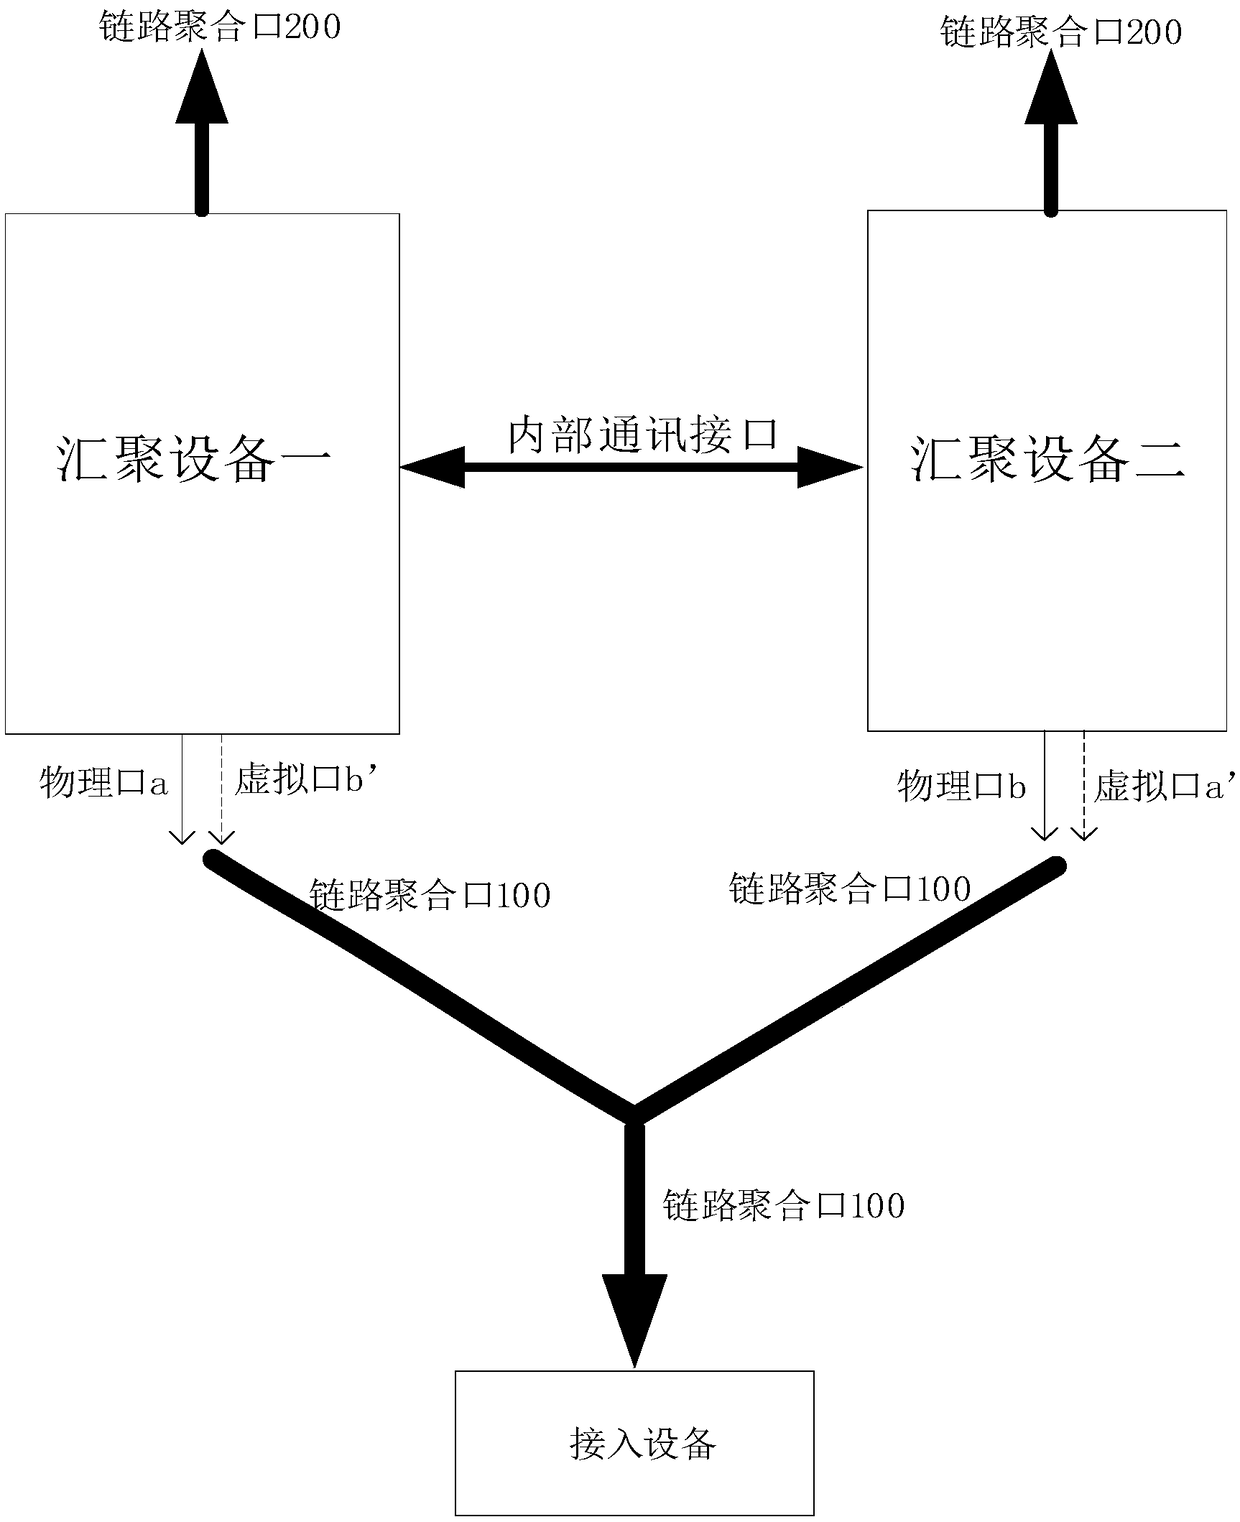 Cross-device link aggregation method, apparatus, computing device and storage medium